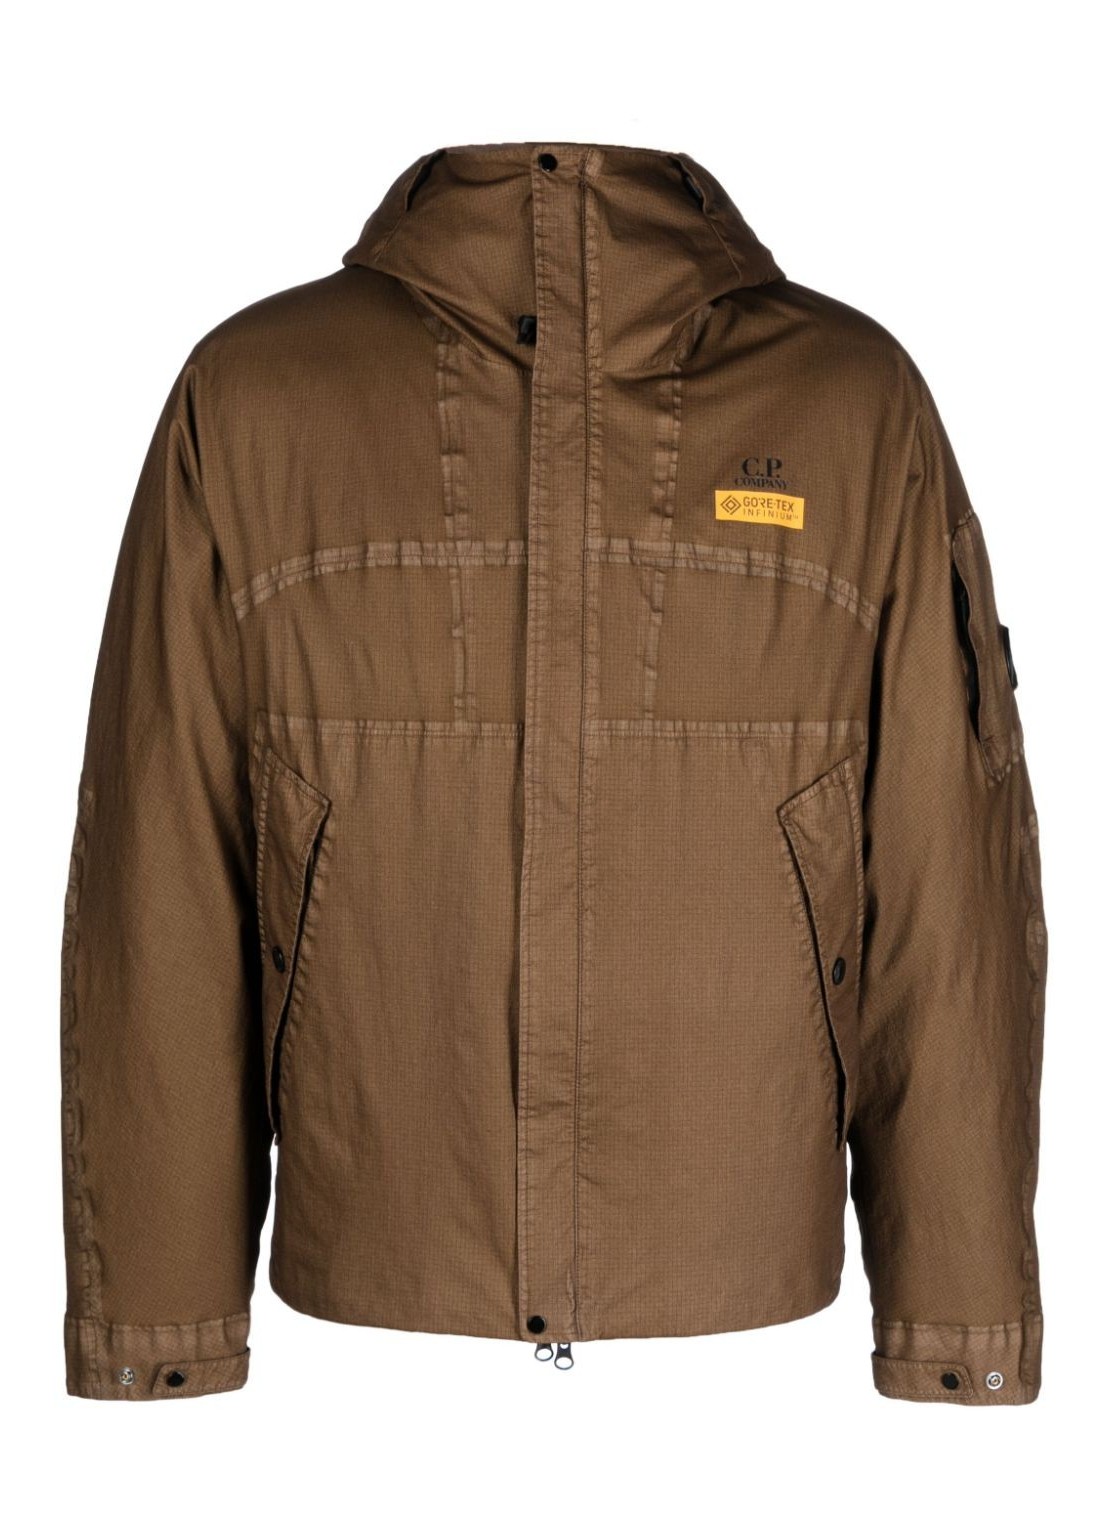 Outerwear c.p.company outerwear man gore g-type hooded jacket 15cmow104a006366g 420 talla marron
 